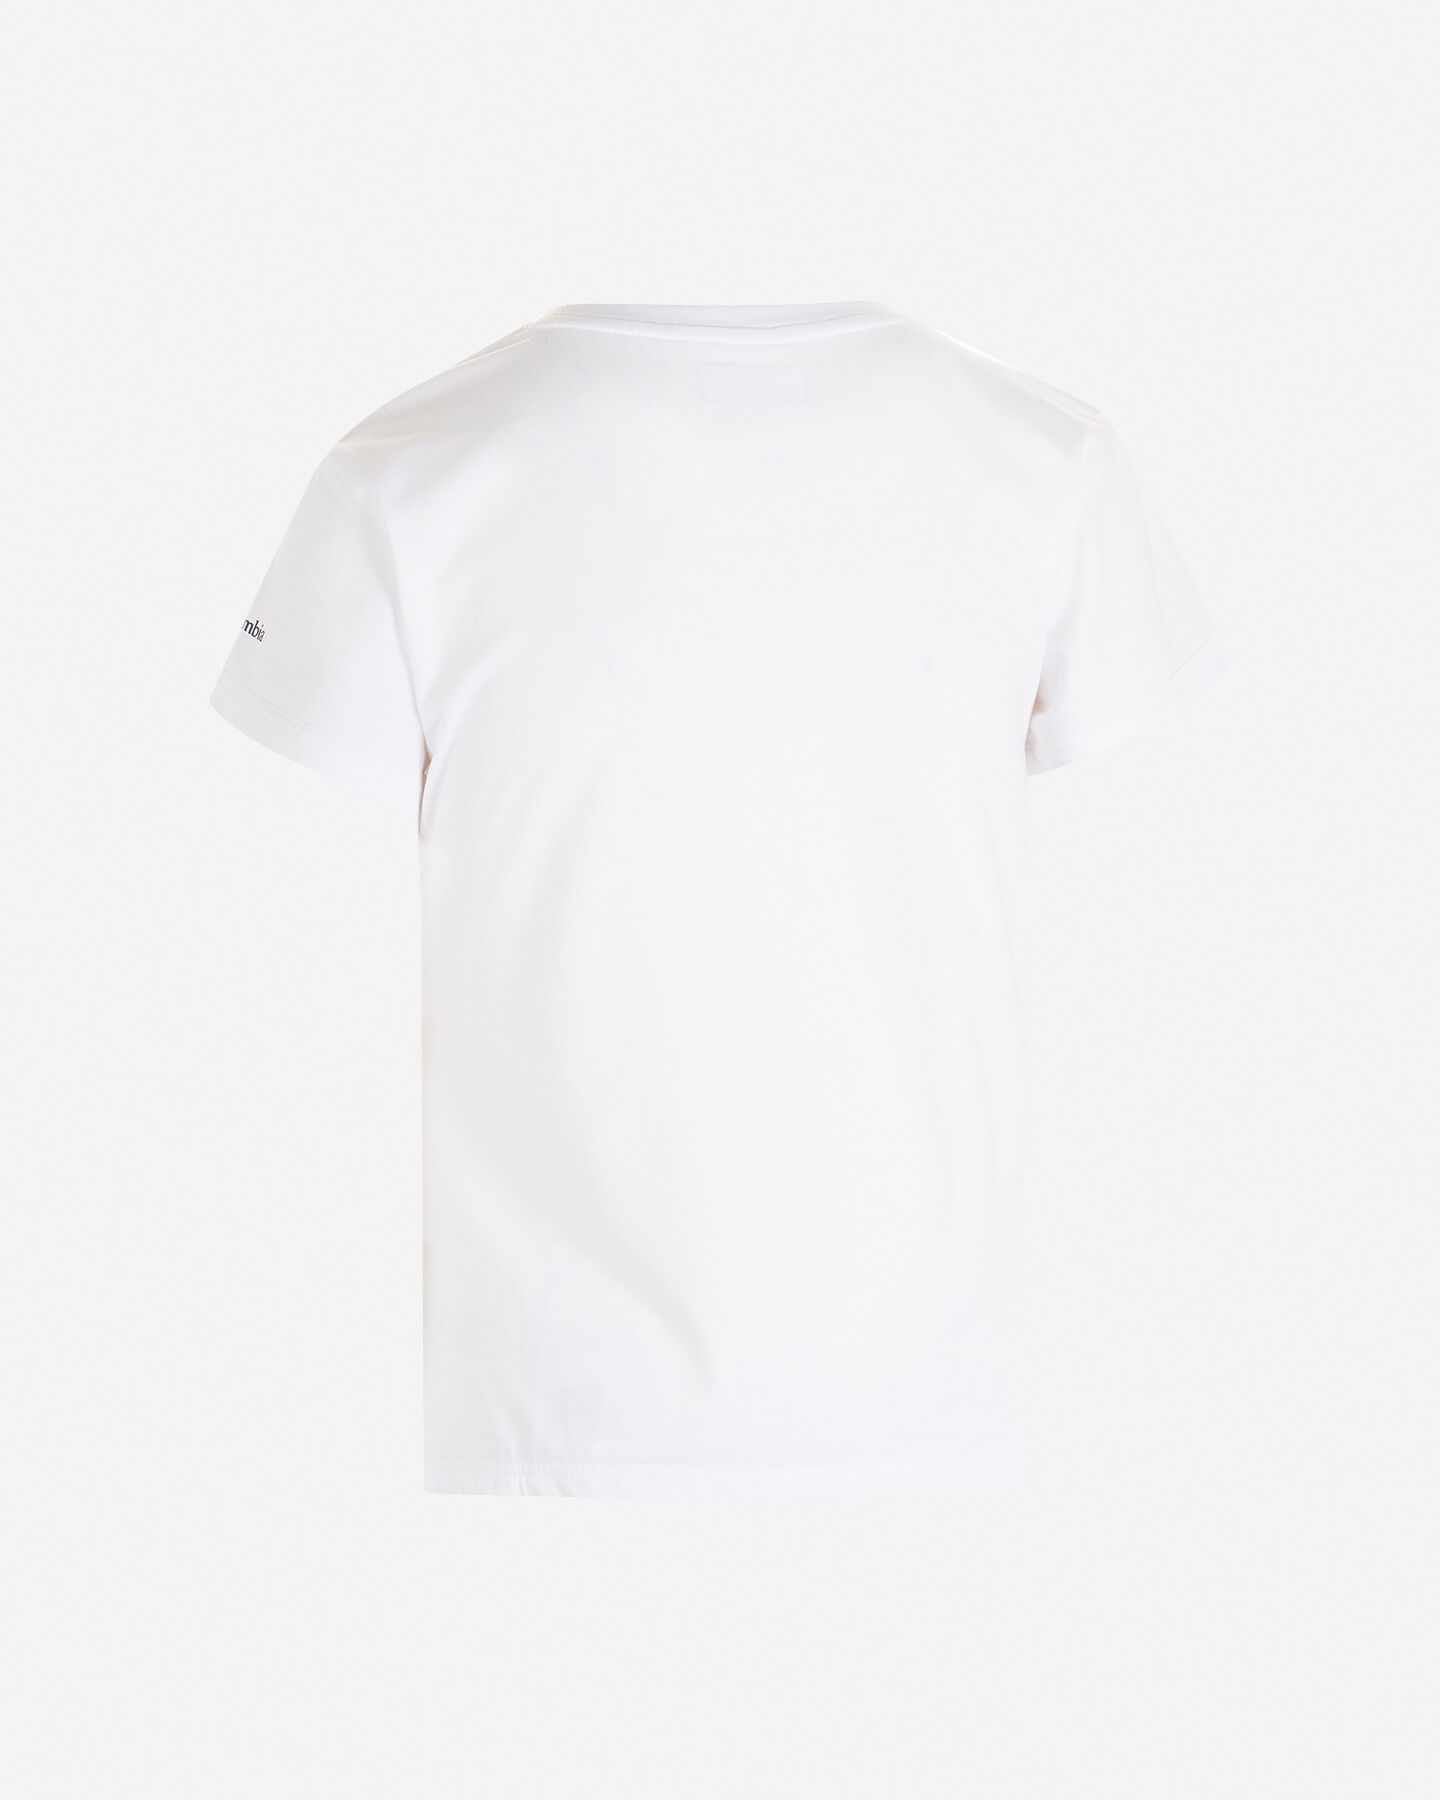  T-Shirt COLUMBIA SUN TREK W S5406947 scatto 1